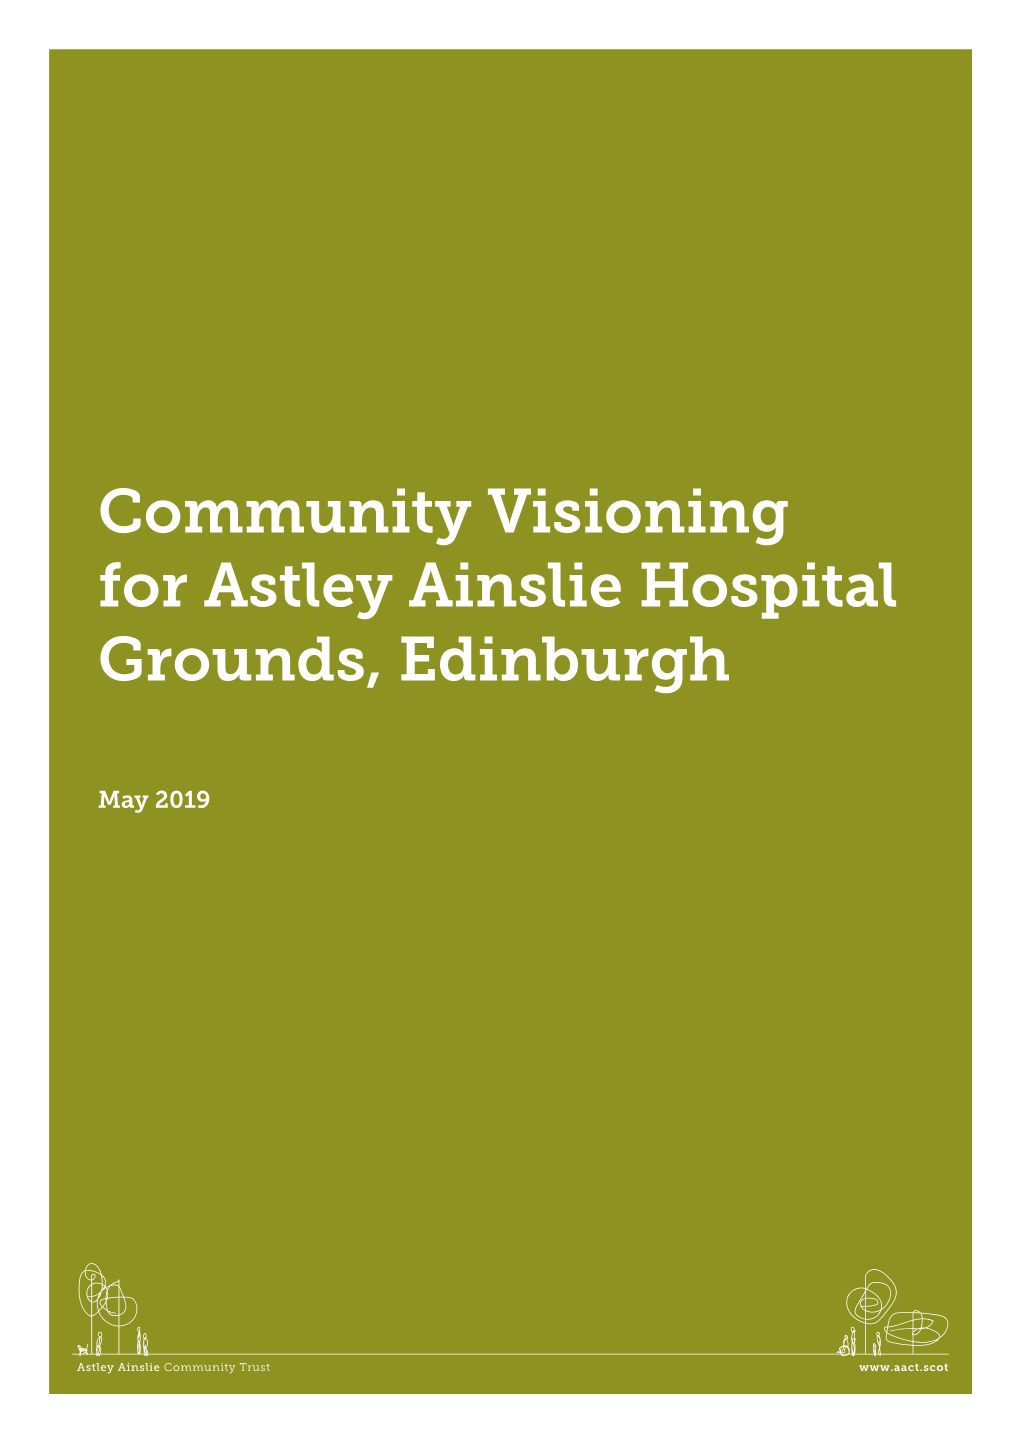 Community Visioning for Astley Ainslie Hospital Grounds, Edinburgh